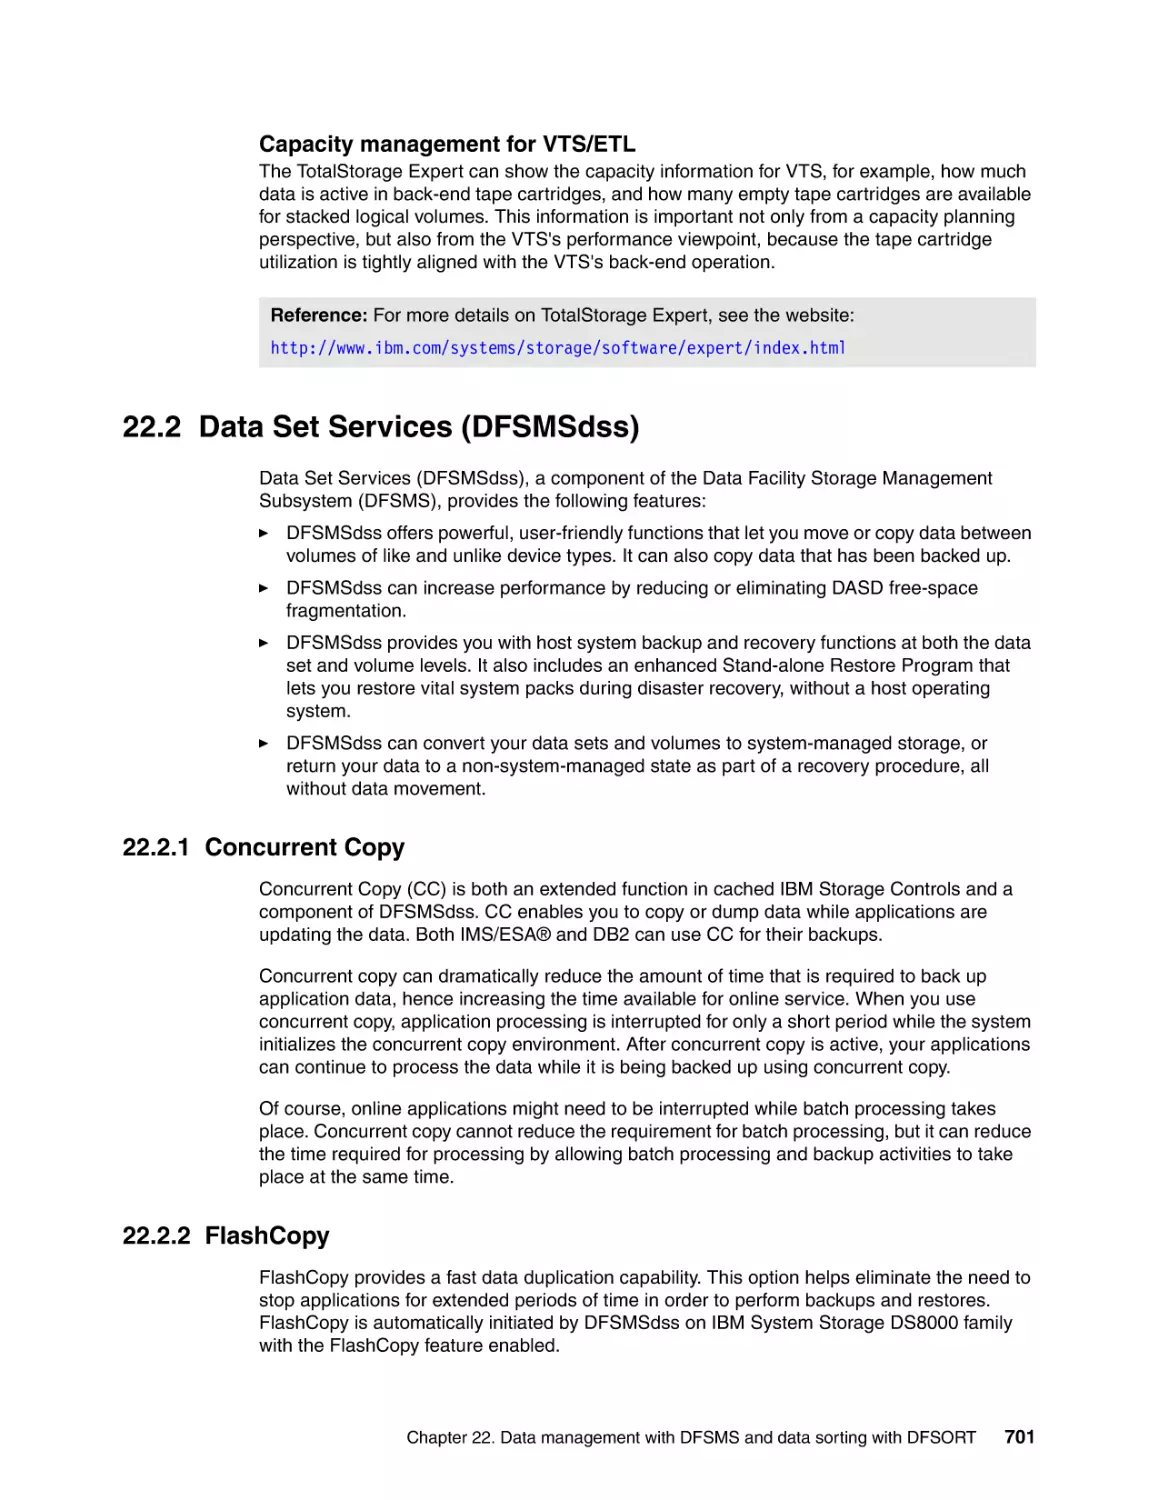 22.2 Data Set Services (DFSMSdss)
22.2.1 Concurrent Copy
22.2.2 FlashCopy